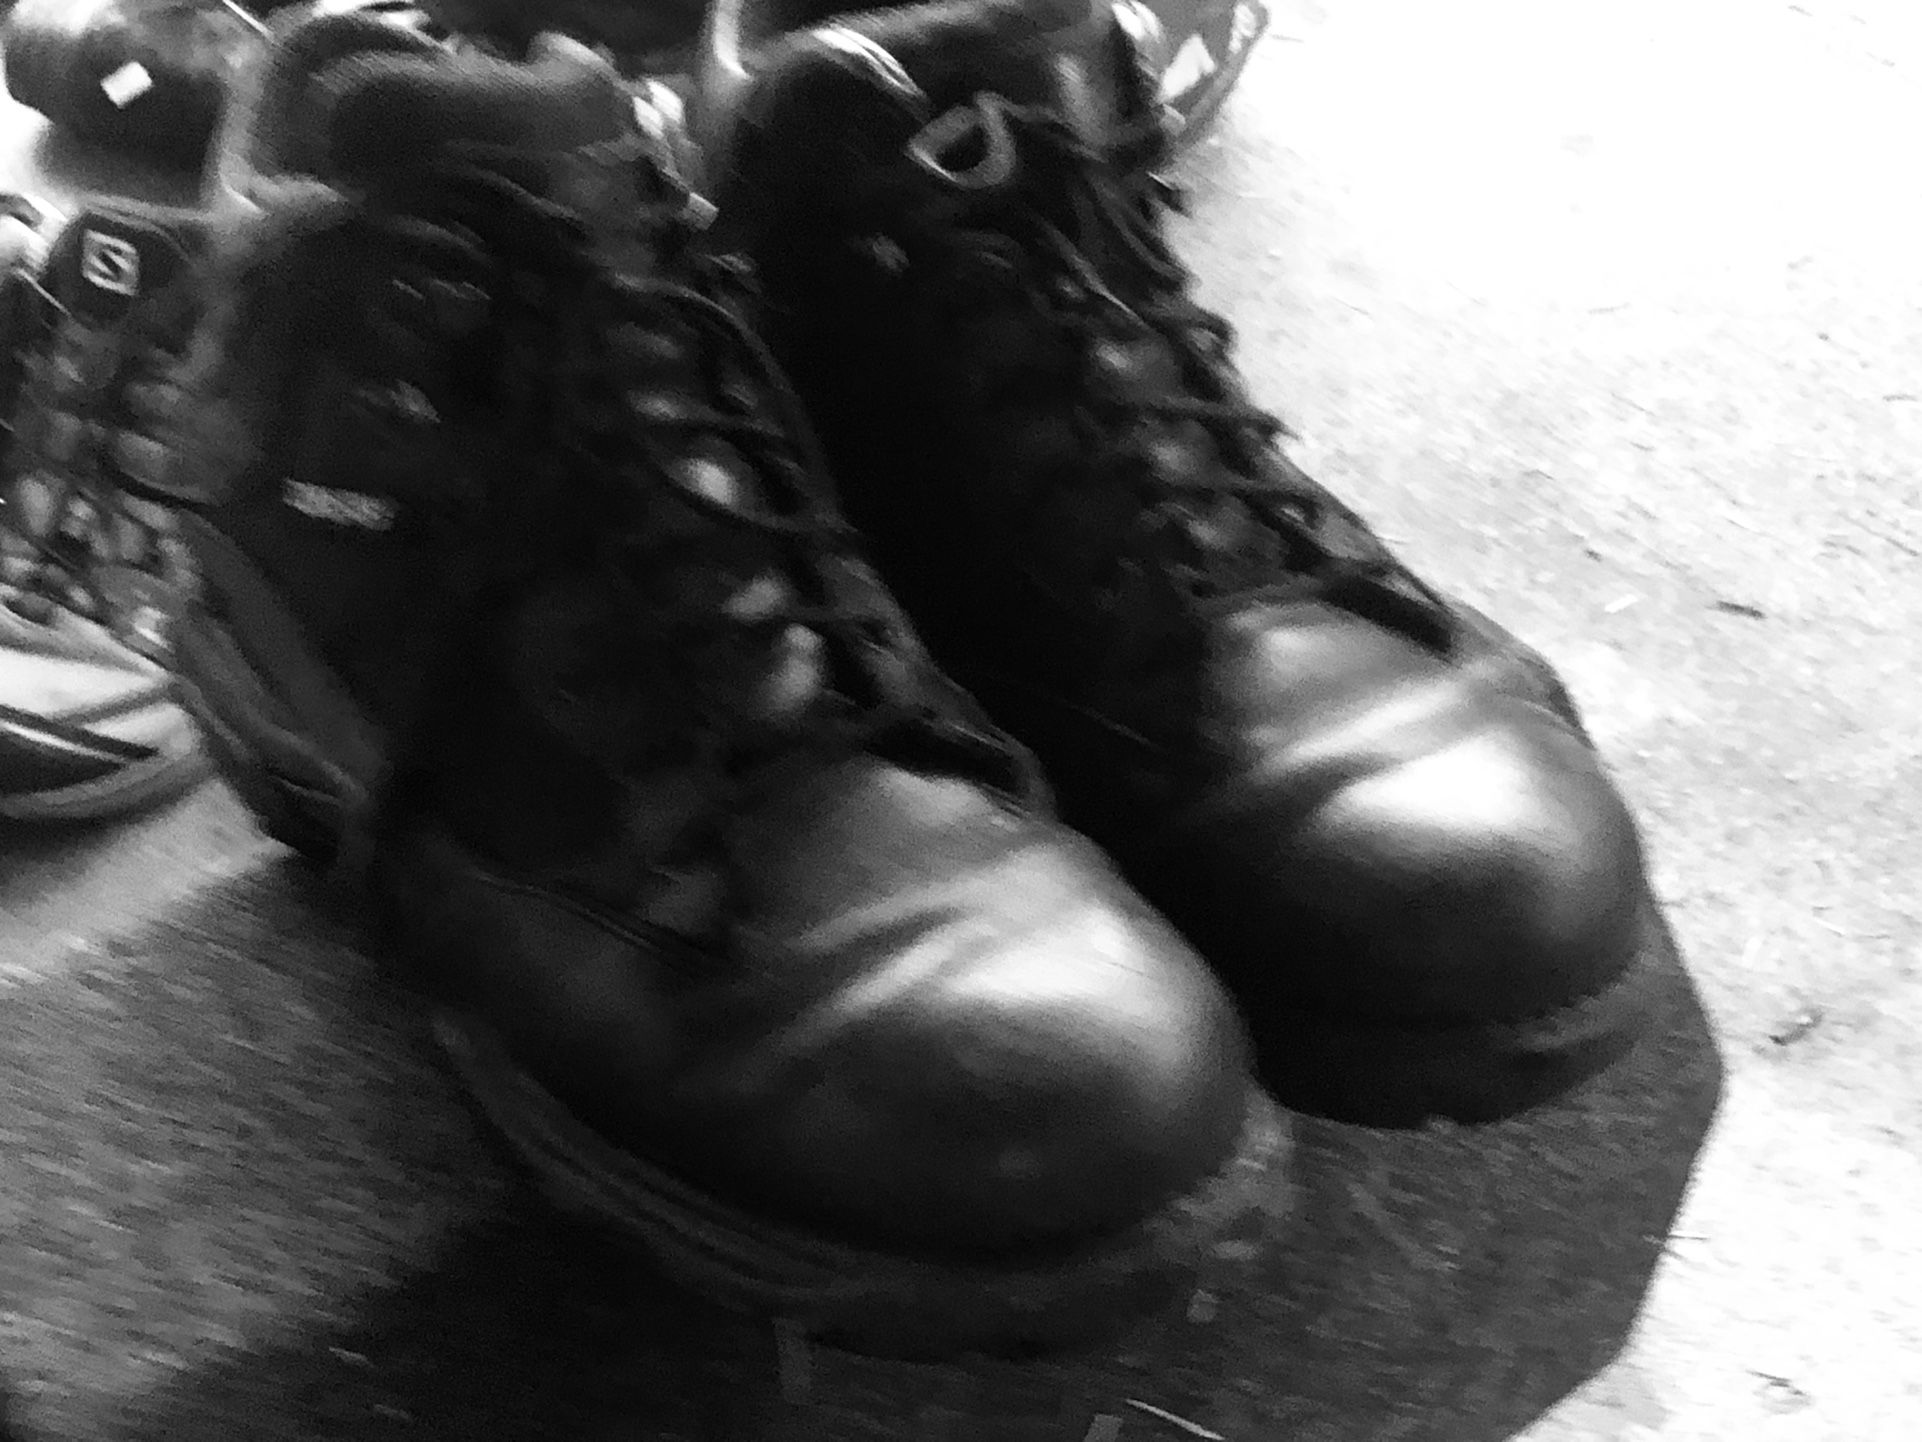 Danner Kinetic Men’s Black Leather/Nylon GTX Hiking Work Boots Size 11.5